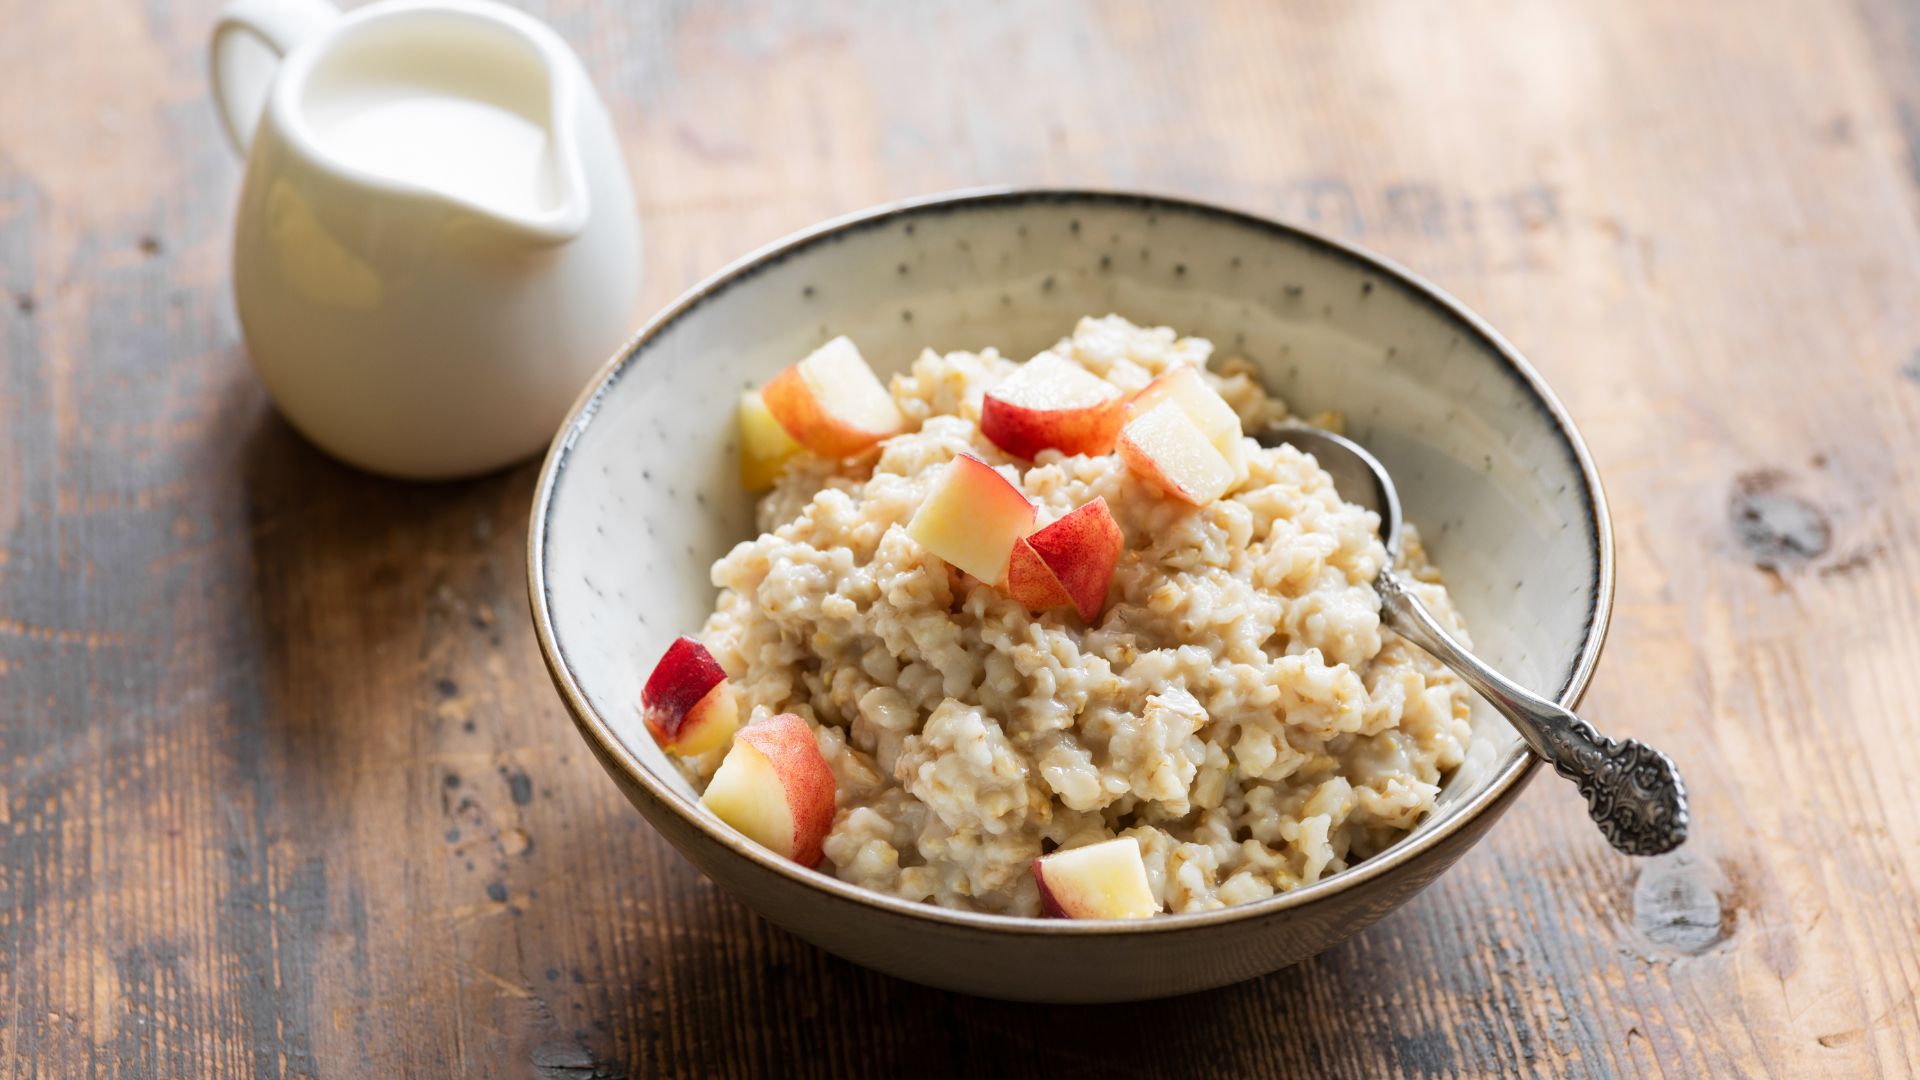 Doctor reveals why you should eat porridge - bowl of porridge